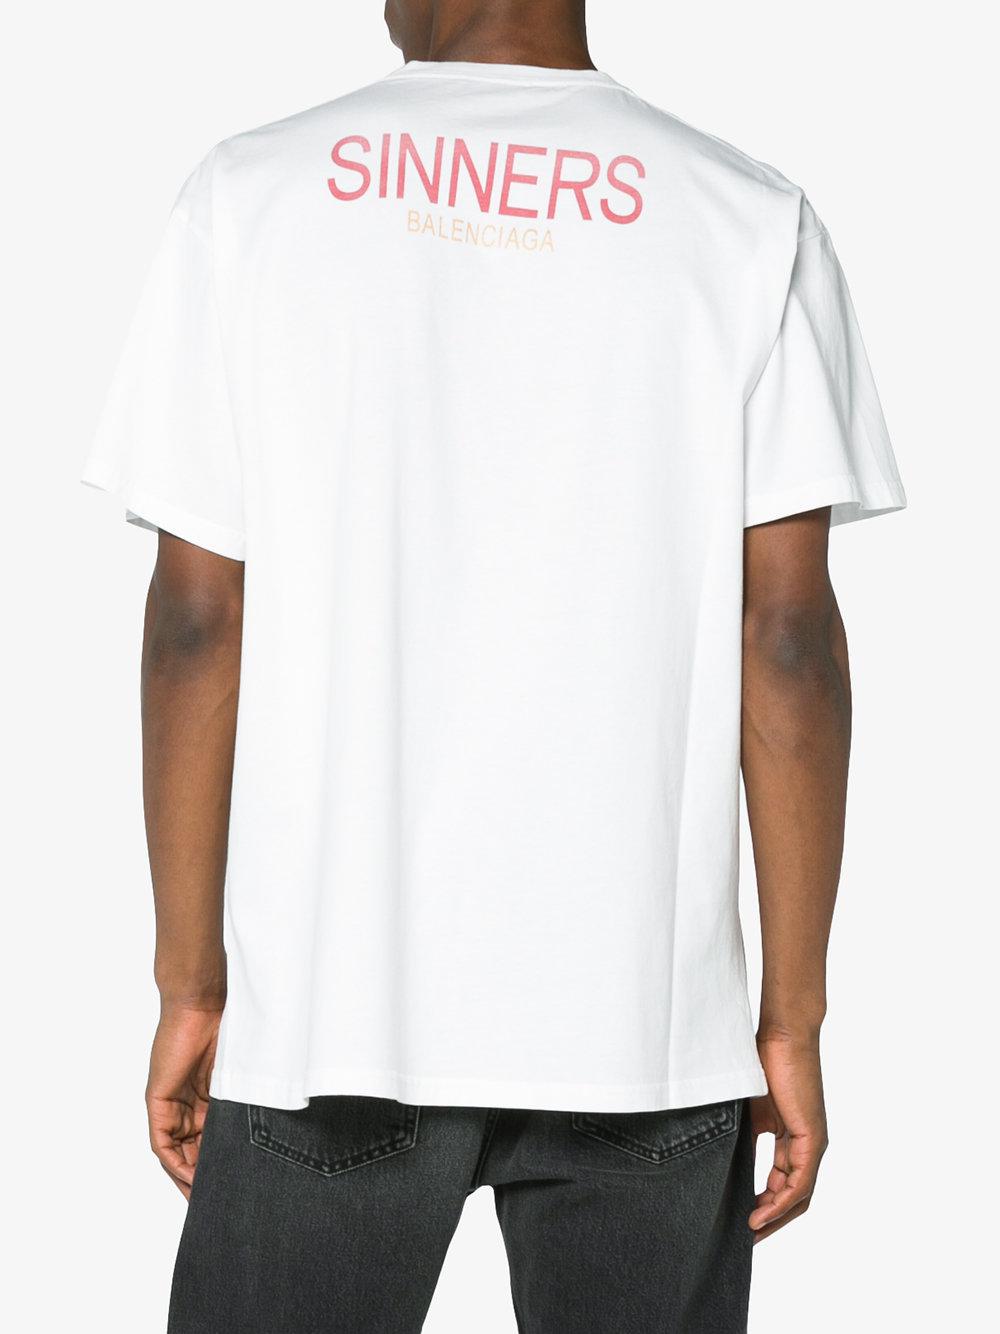 Balenciaga Cotton Bal Sinners Oversized T-shirt in White ...